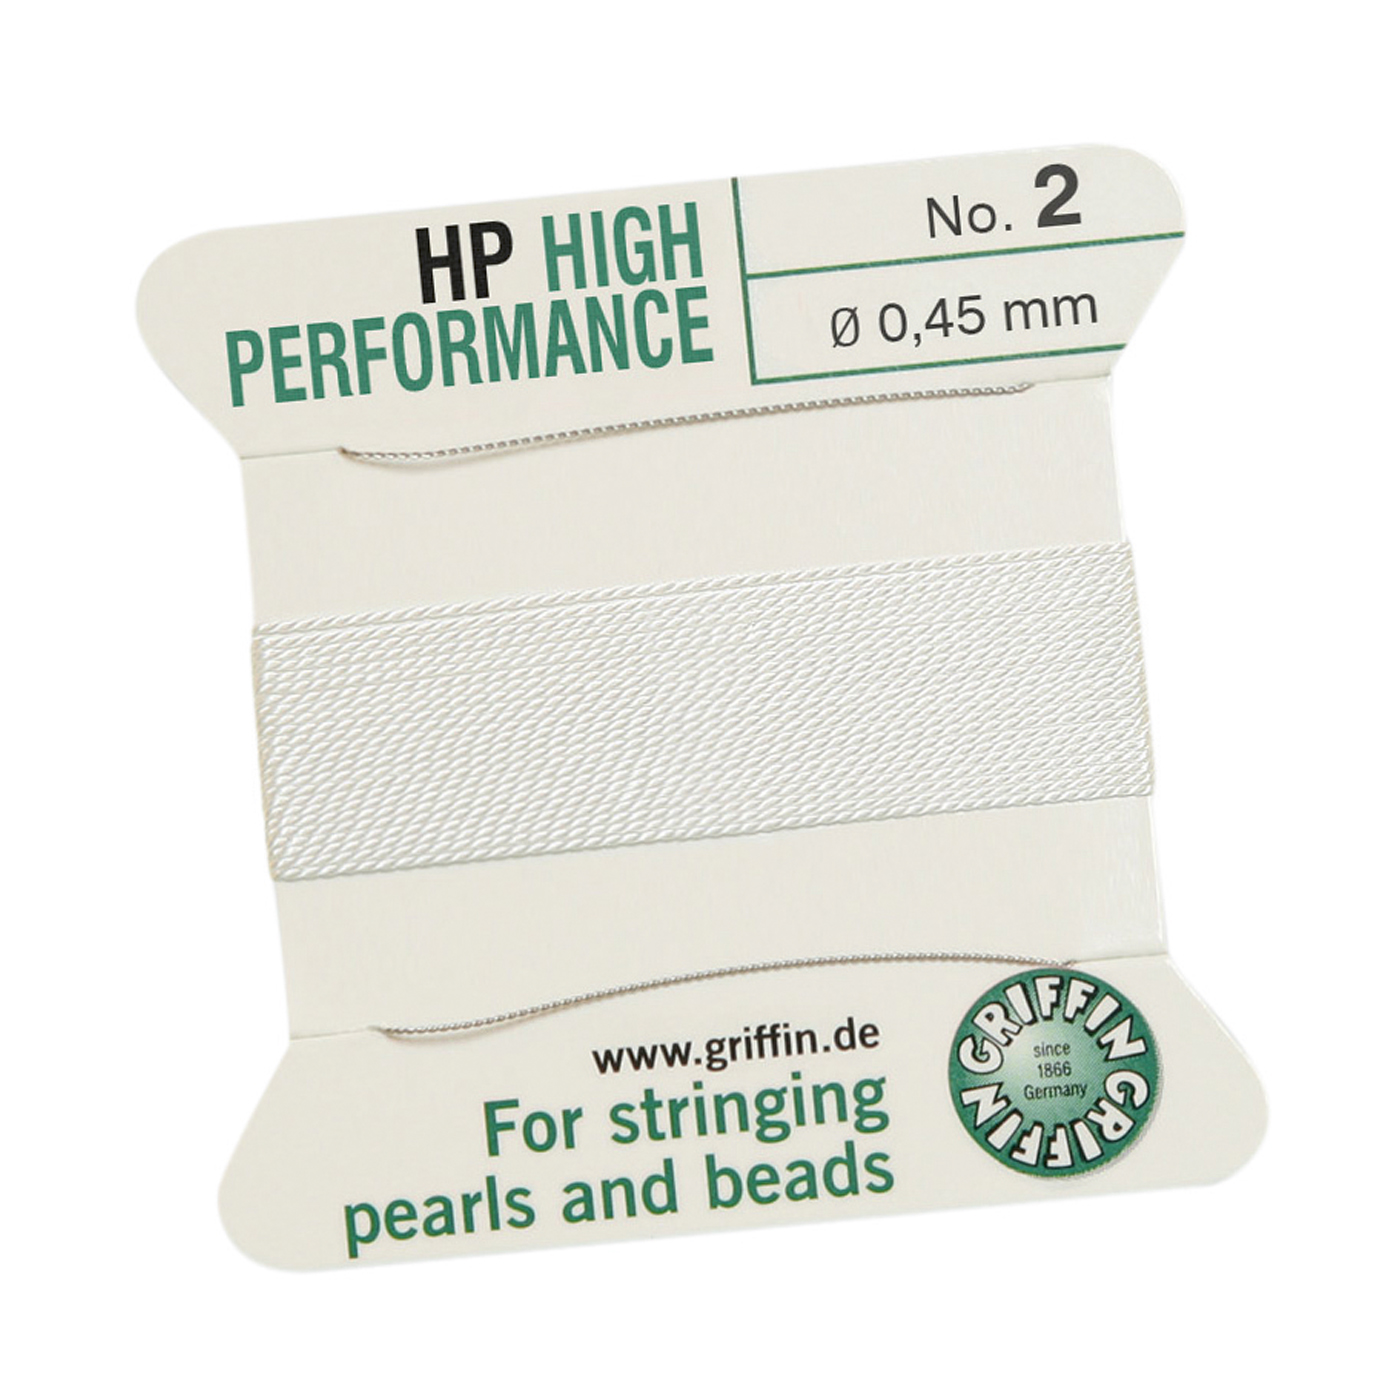 Bead Cord High Performance Perlseide, weiß, 2 Nadeln, Nr. 2 - 2 m